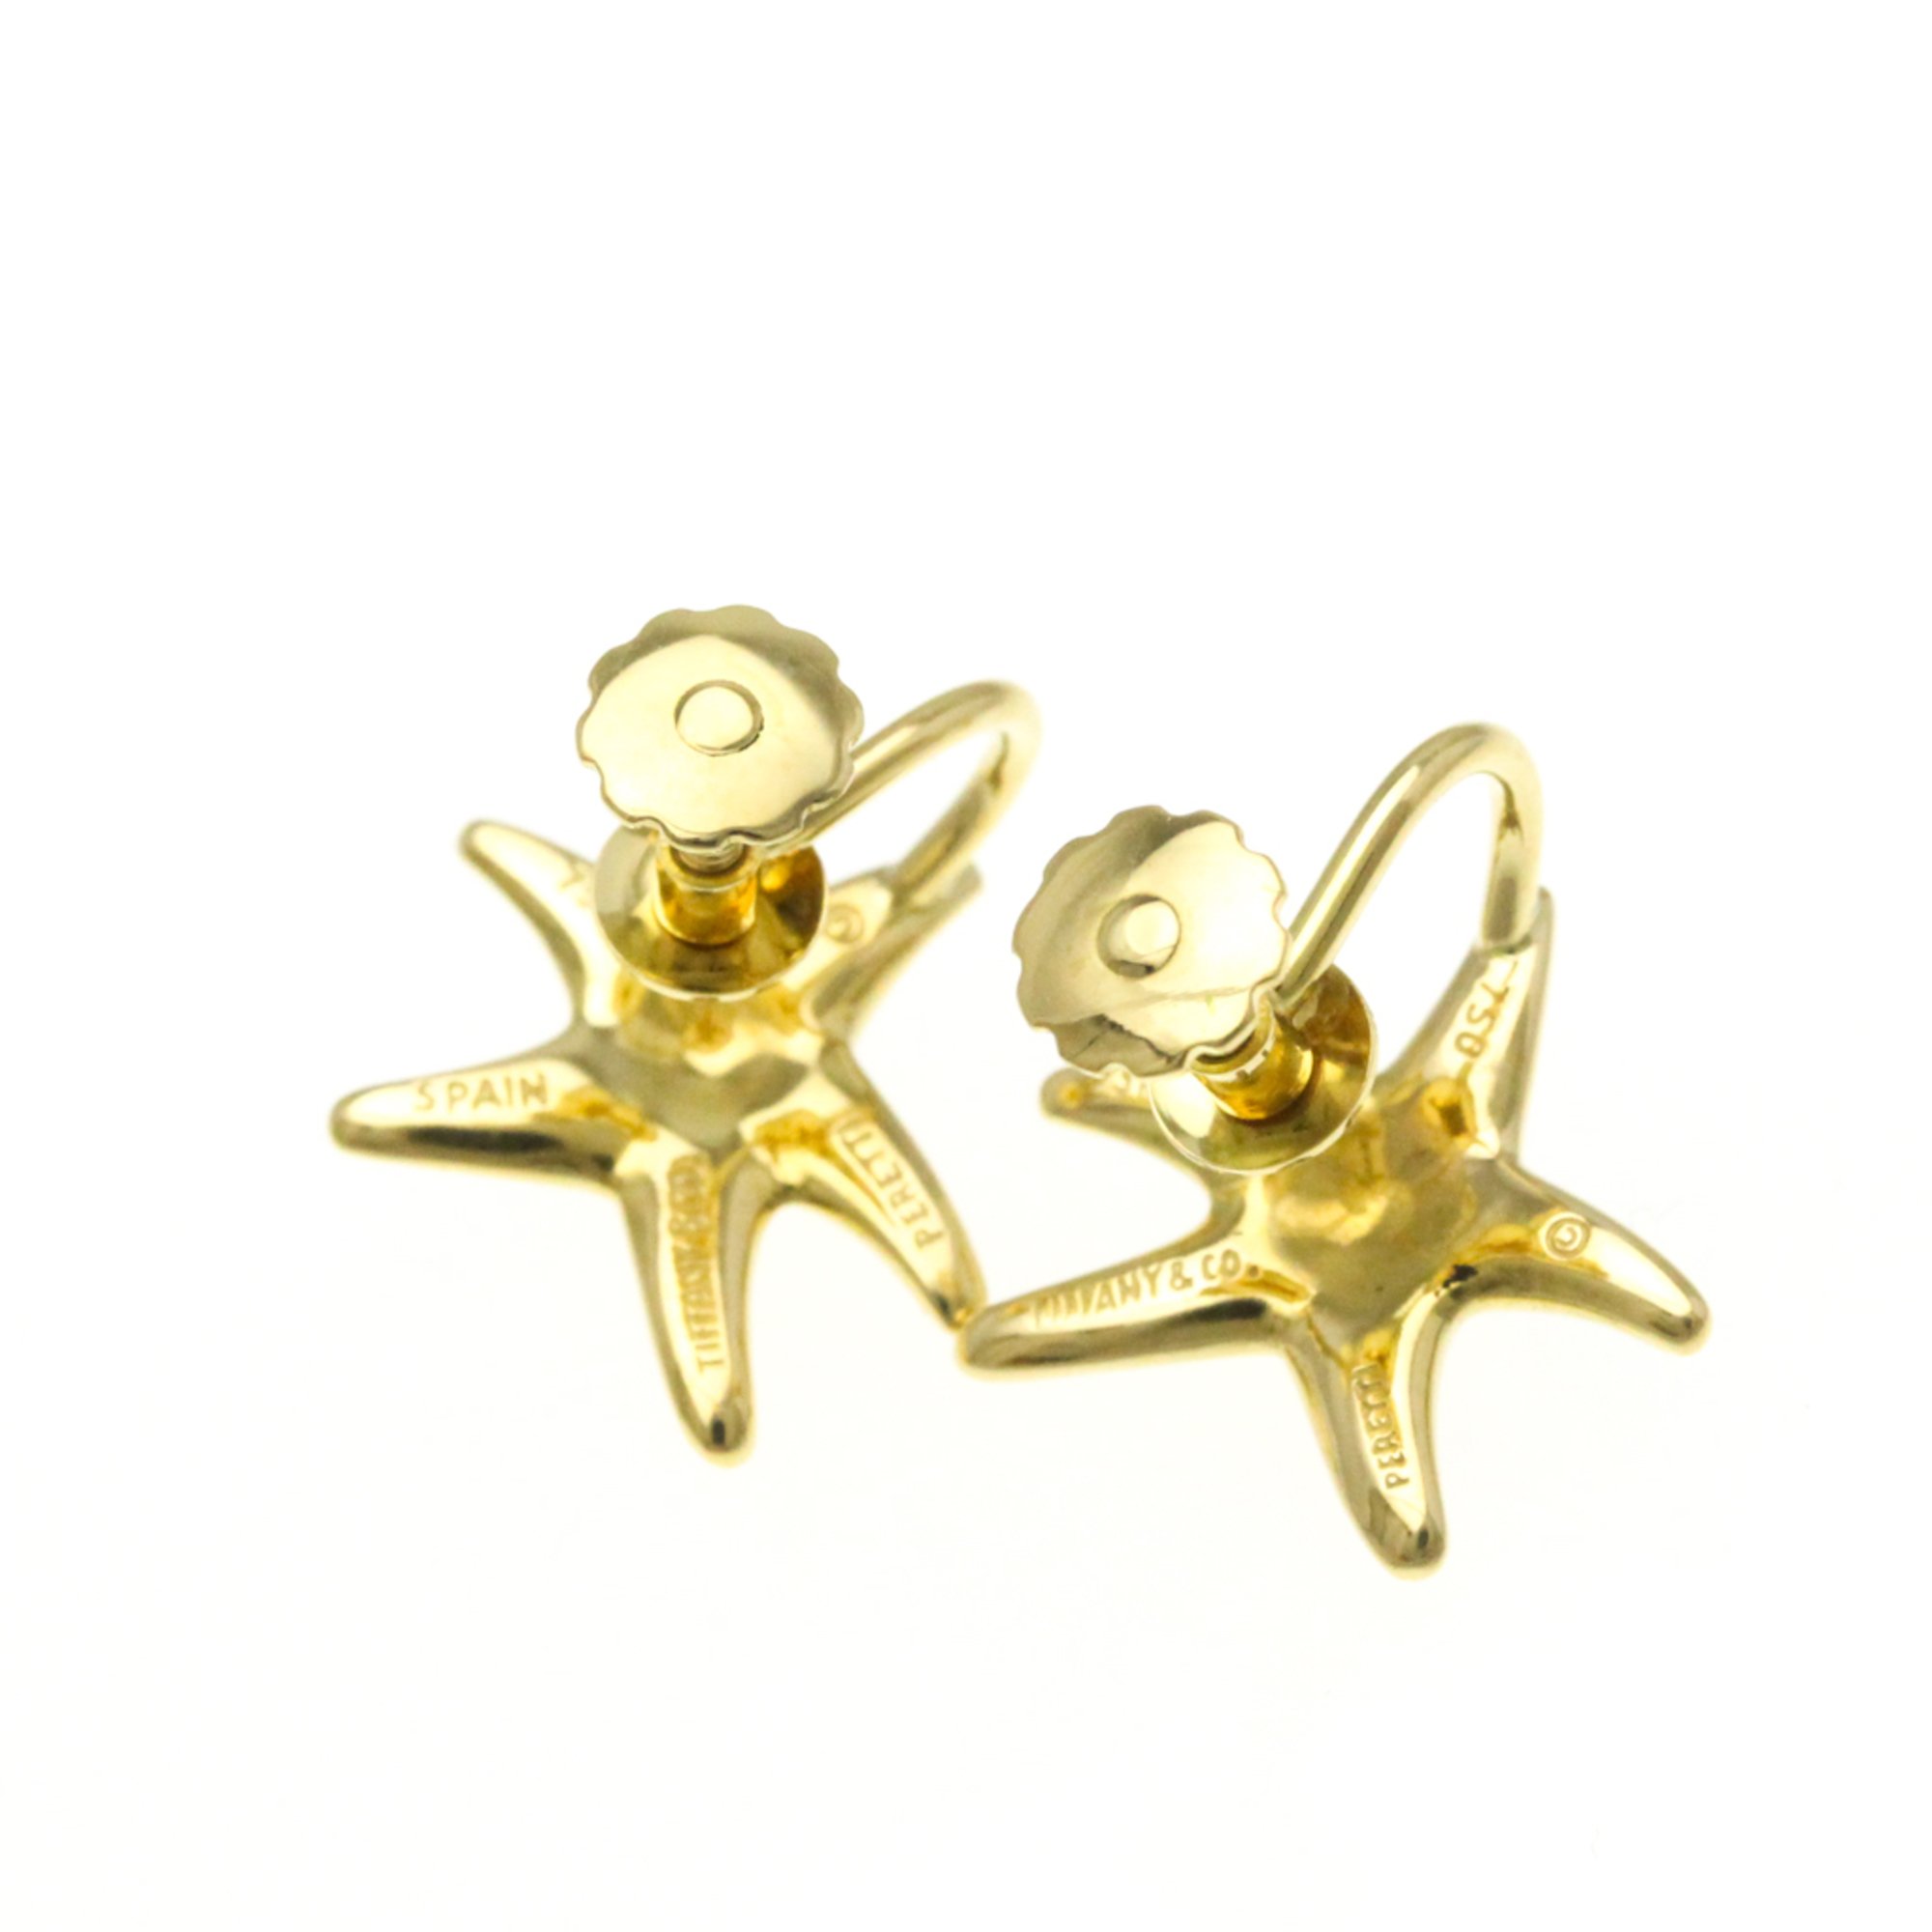 Tiffany Starfish Earrings No Stone Yellow Gold (18K) Clip Earrings Gold